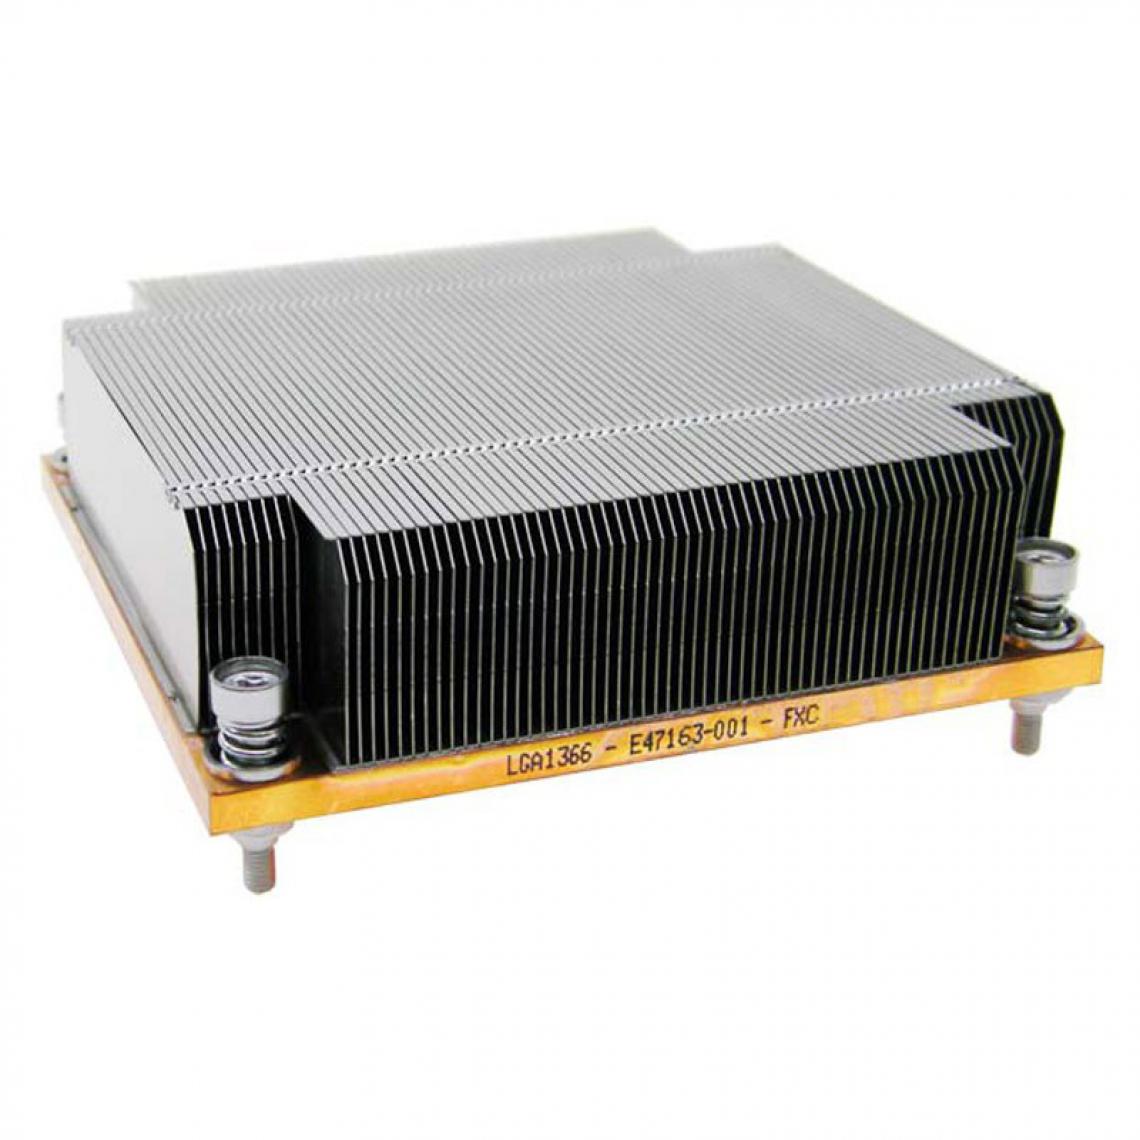 Intel - Dissipateur Processeur Intel E47163-001 19615A CPU Heatsink Socket LGA1366 - Dissipateur mémoire PC